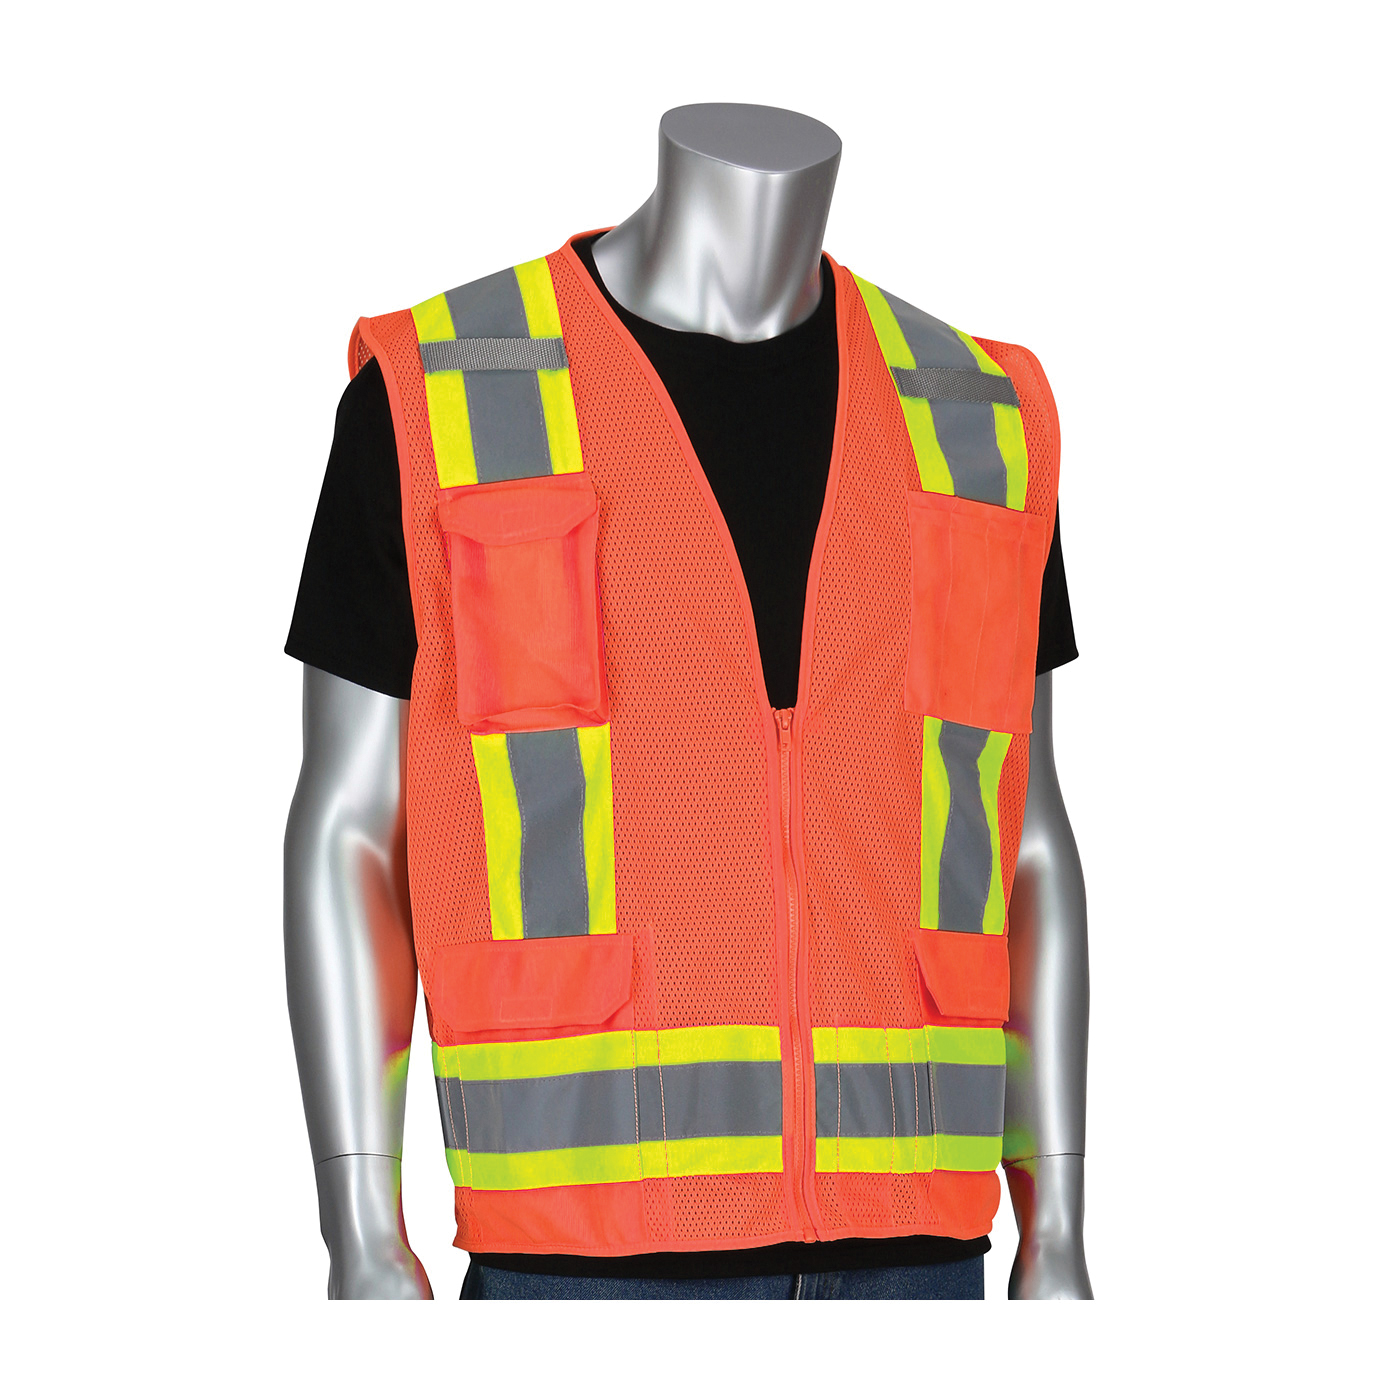 PIP® 302-0500M-OR/L 2-Tone Surveyor Safety Vest, L, Hi-Viz Orange, Polyester, Zipper Closure, 11 Pockets, ANSI Class: Class 2, Specifications Met: ANSI 107 Type R